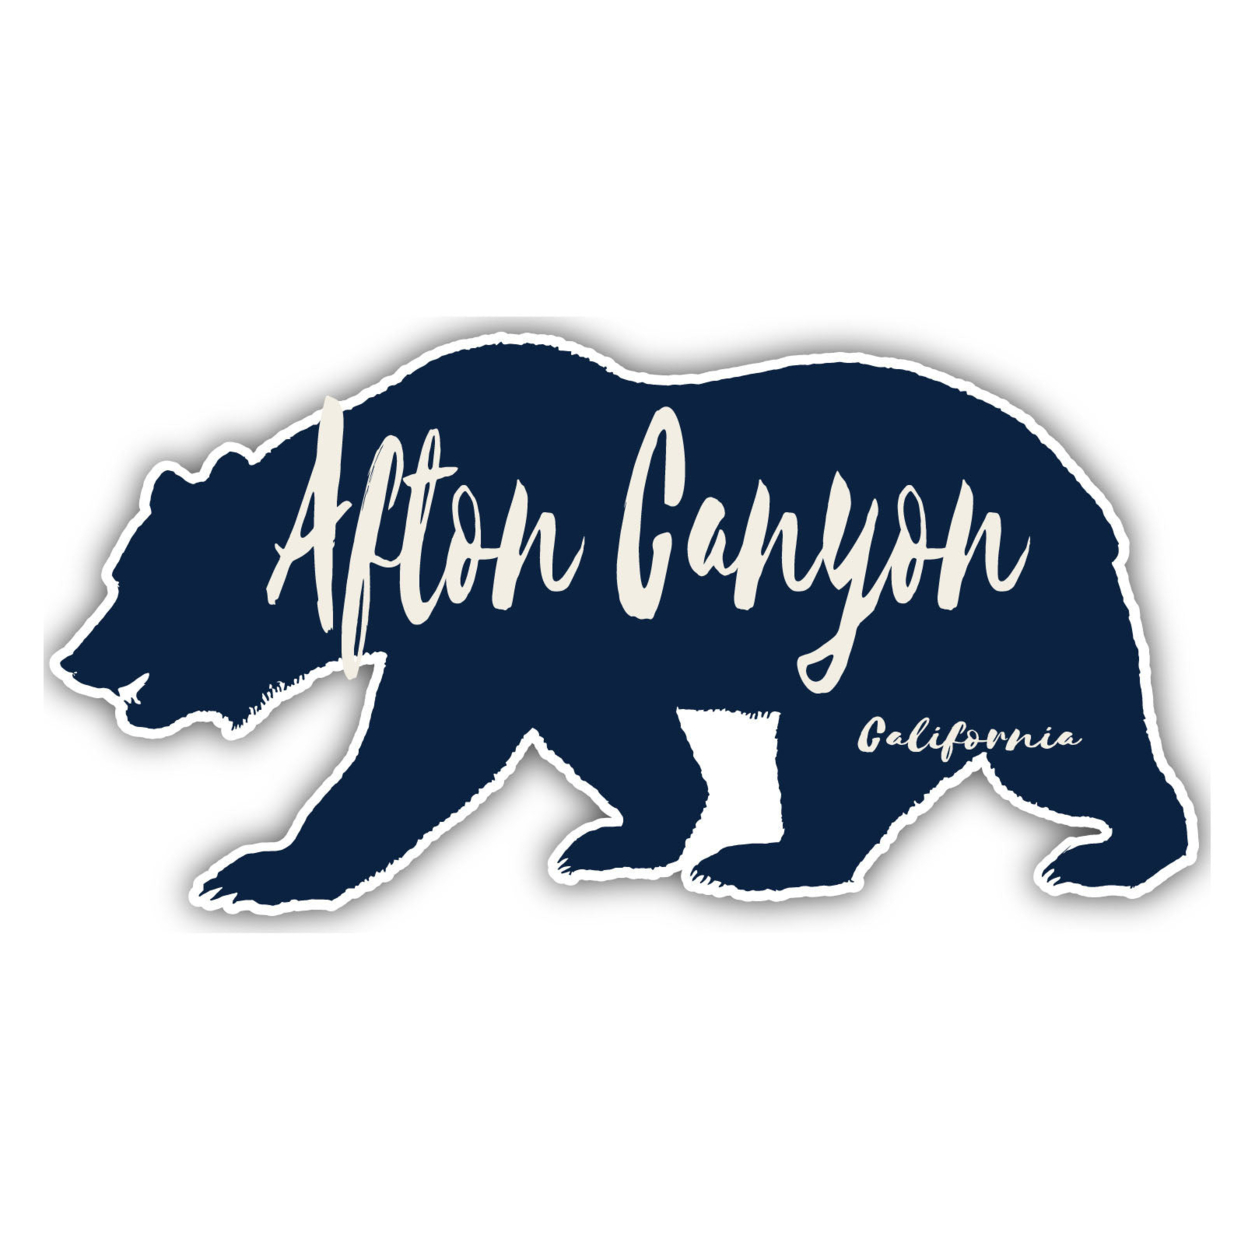 Afton Canyon California Souvenir Decorative Stickers (Choose Theme And Size) - Single Unit, 4-Inch, Bear